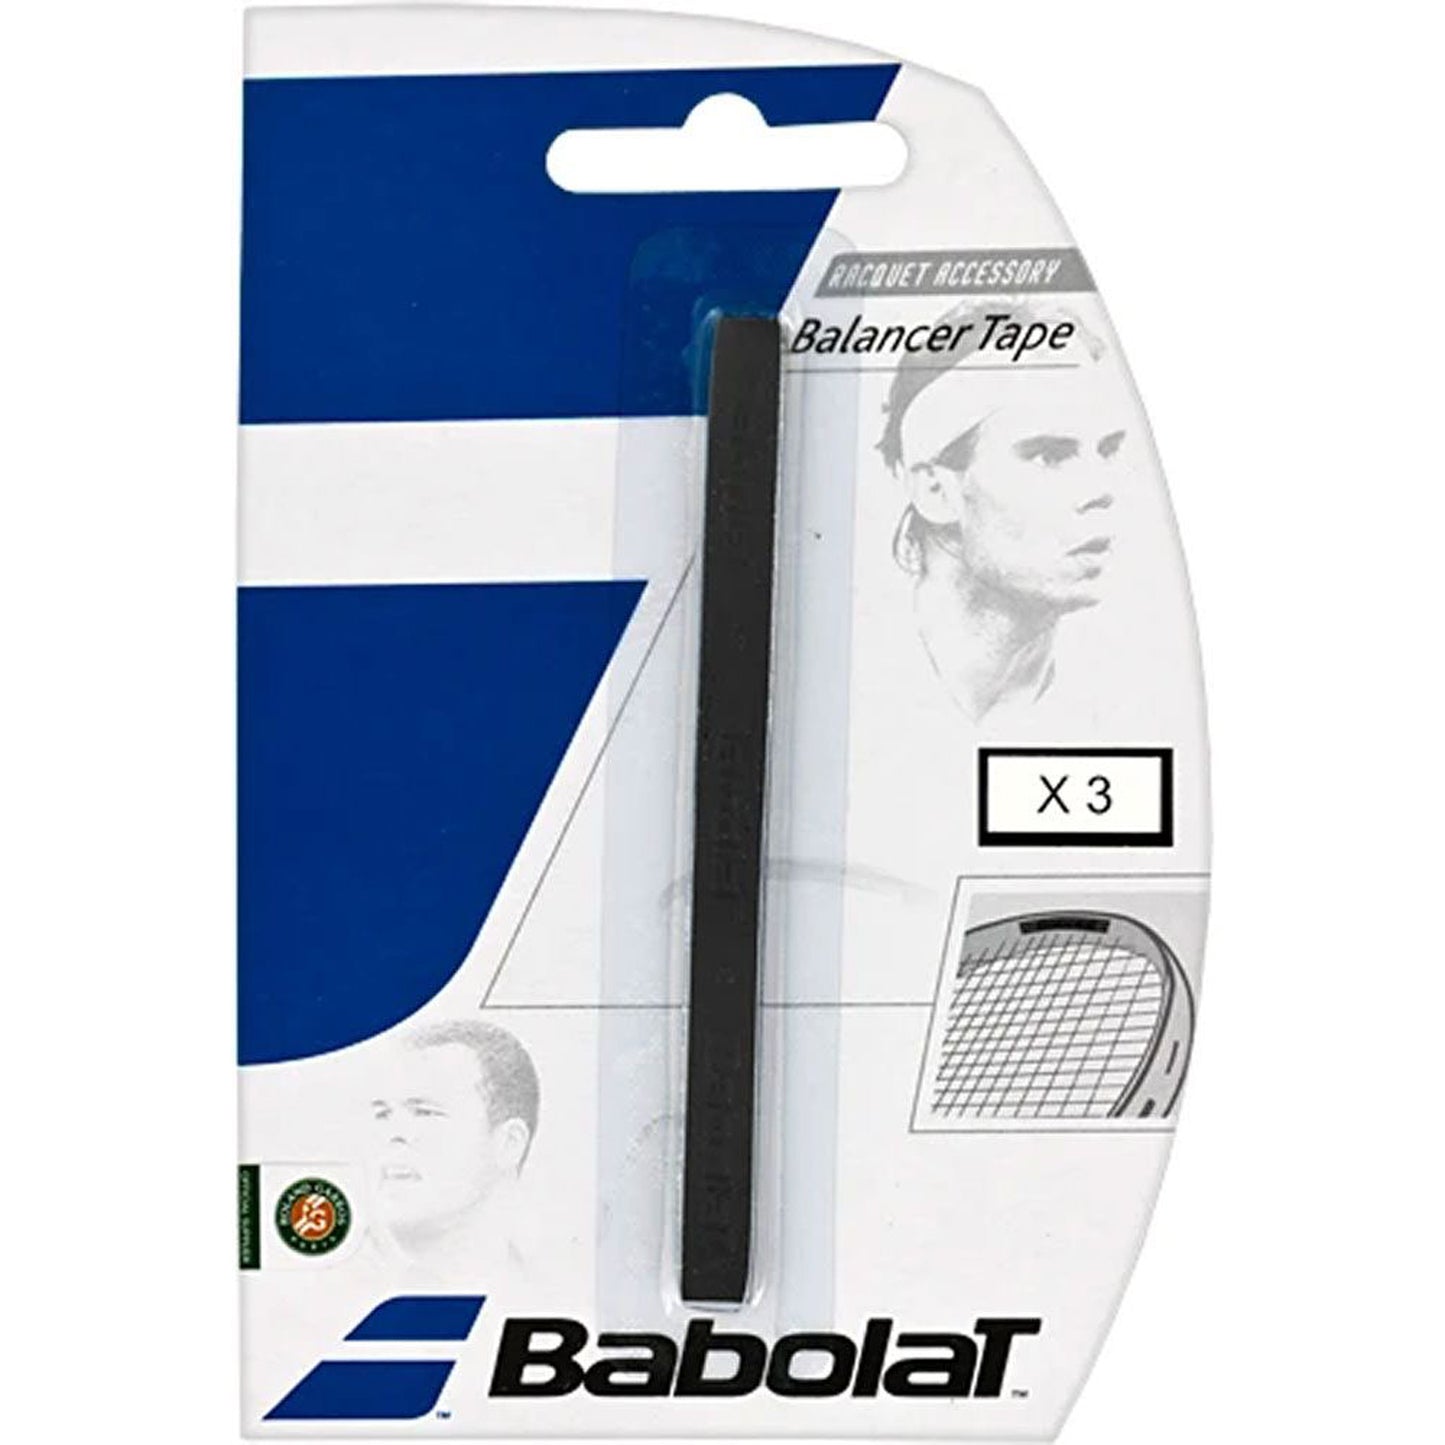 Babolat Balancer Tape 3x3 - Black - Best Price online Prokicksports.com